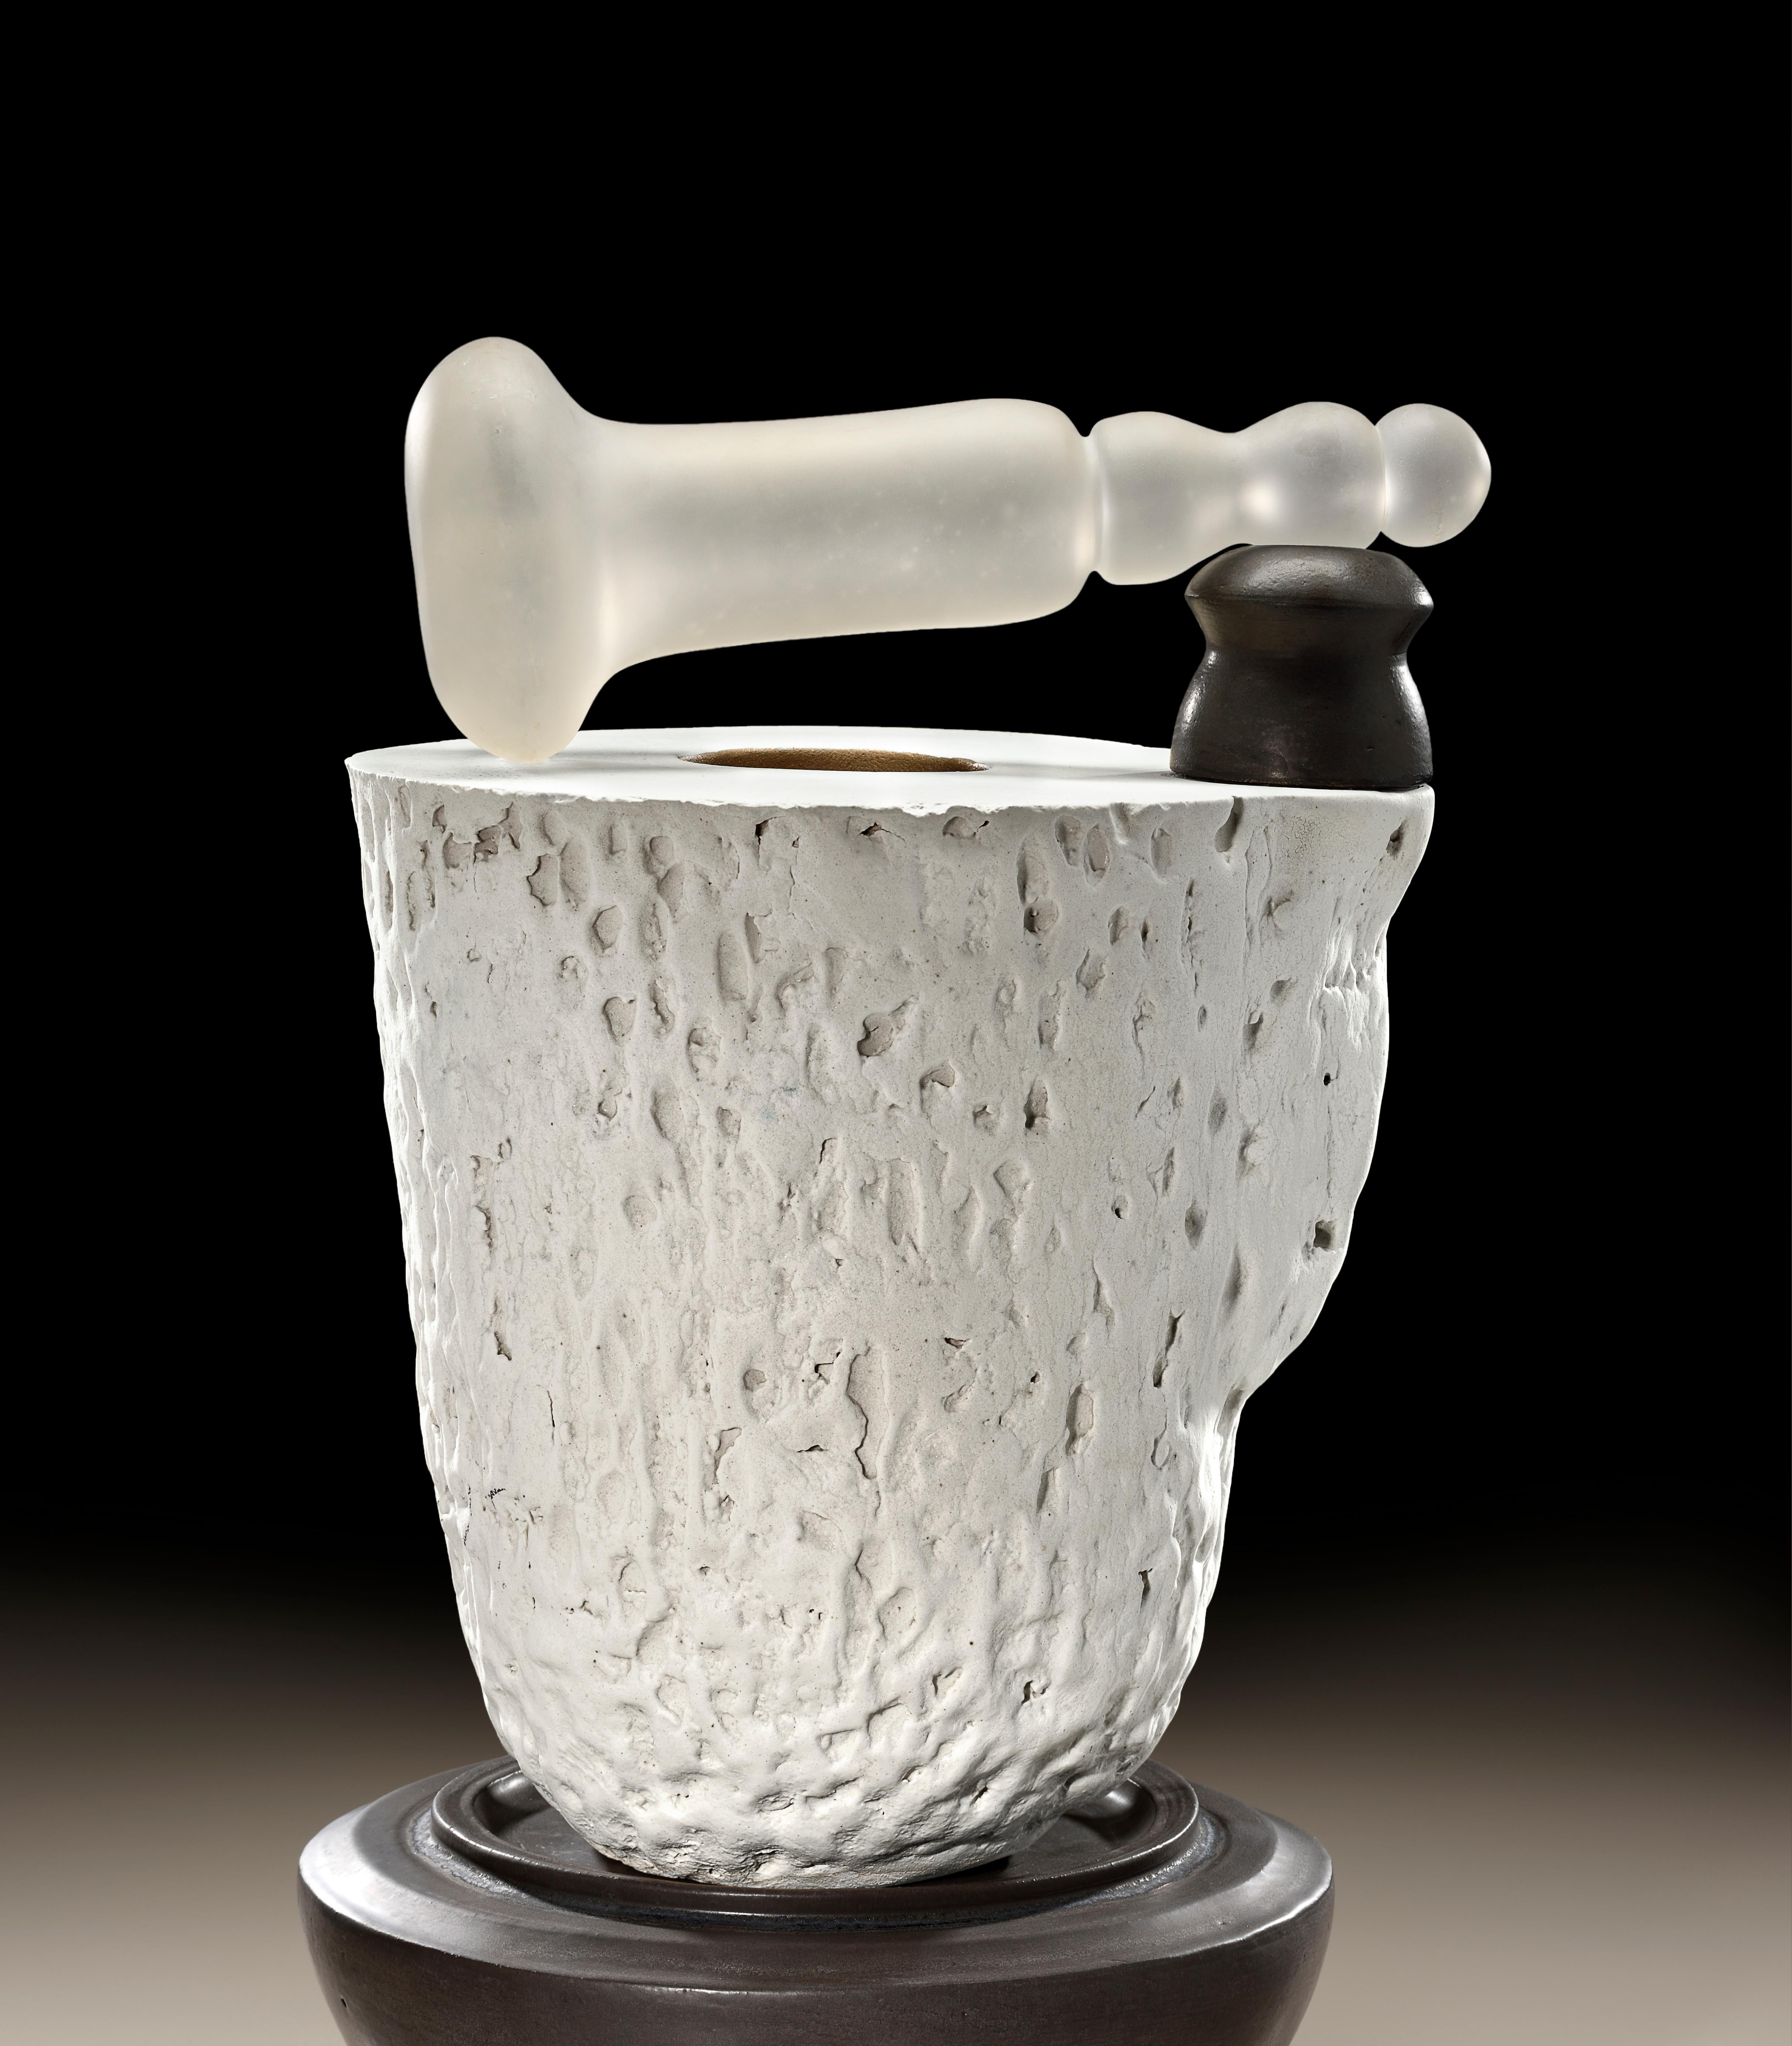 American Richard Hirsch Ceramic Mortar and Glass Pestle Sculpture #4, 2020 For Sale